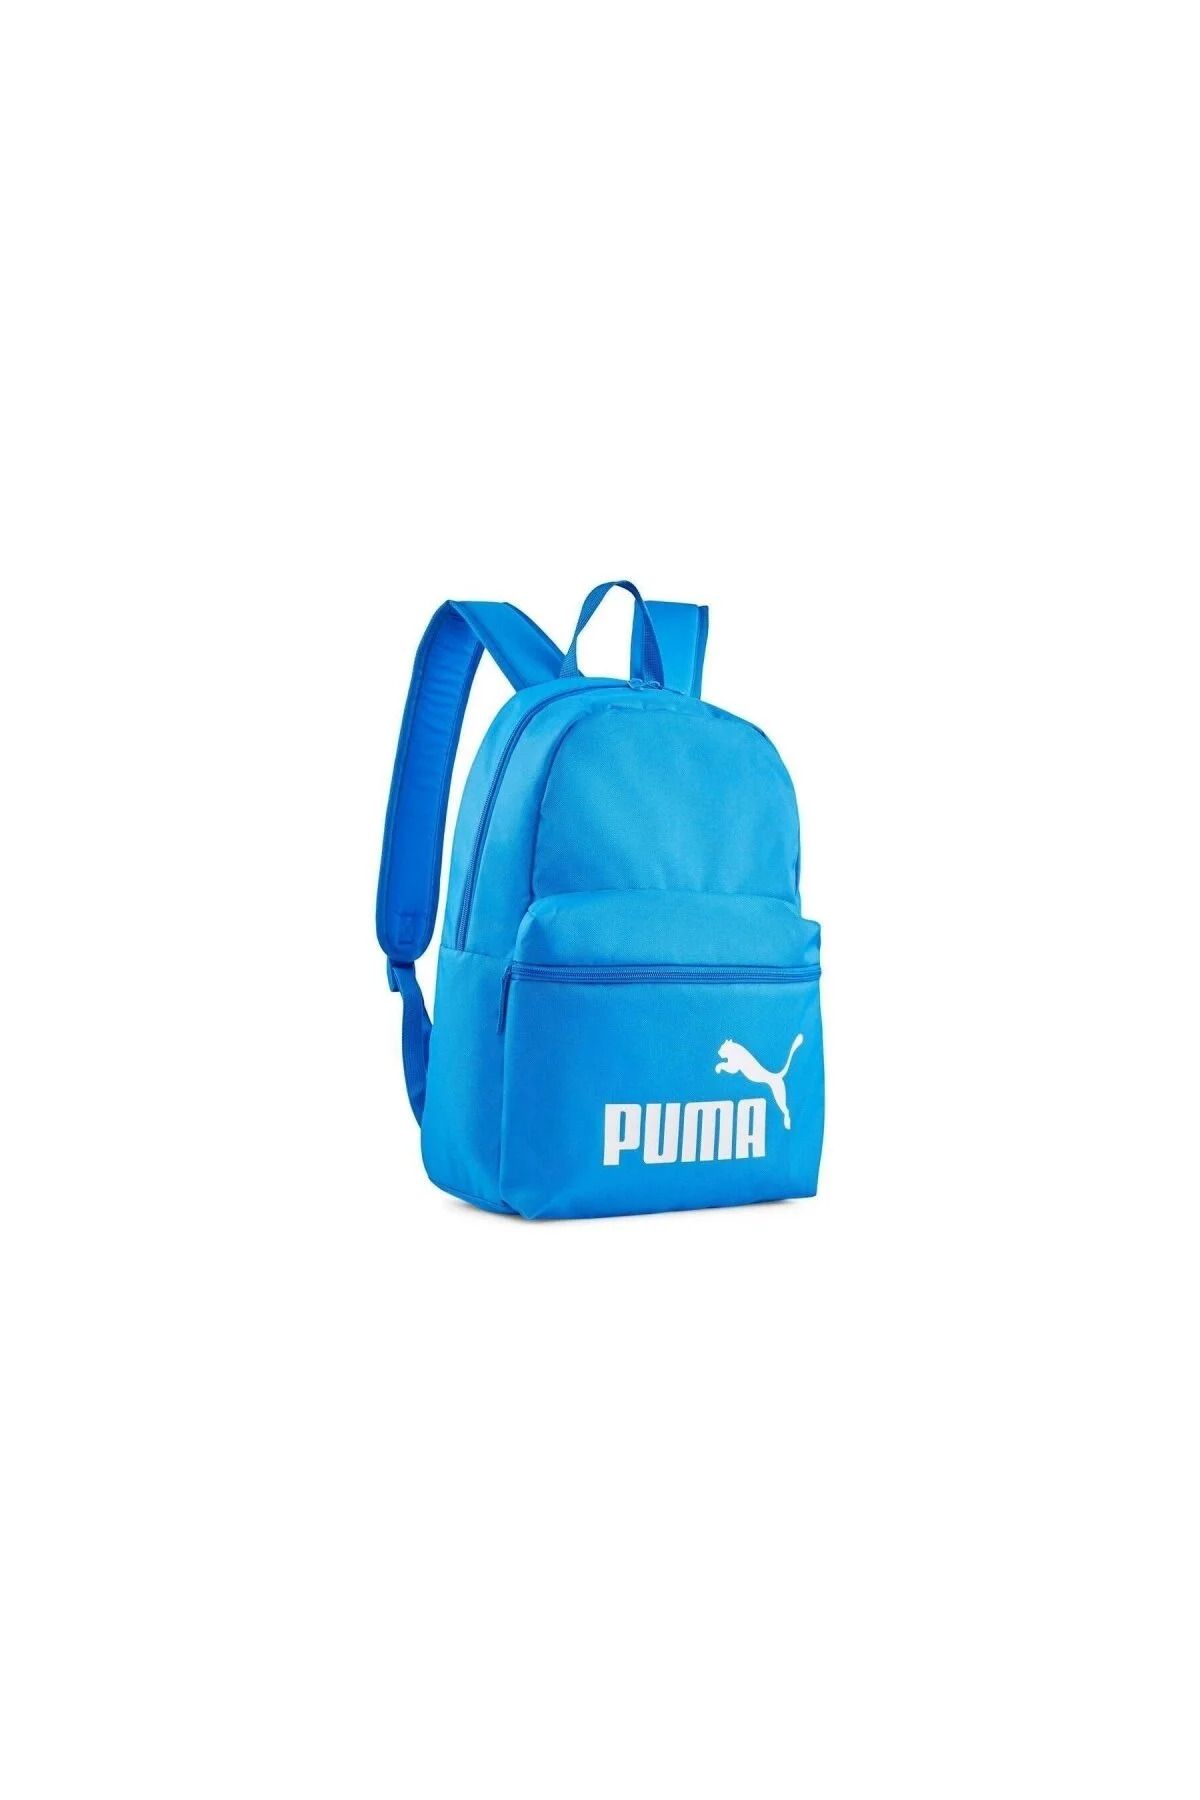 Puma School Backpack II (30L) – Giftlinks Online Store